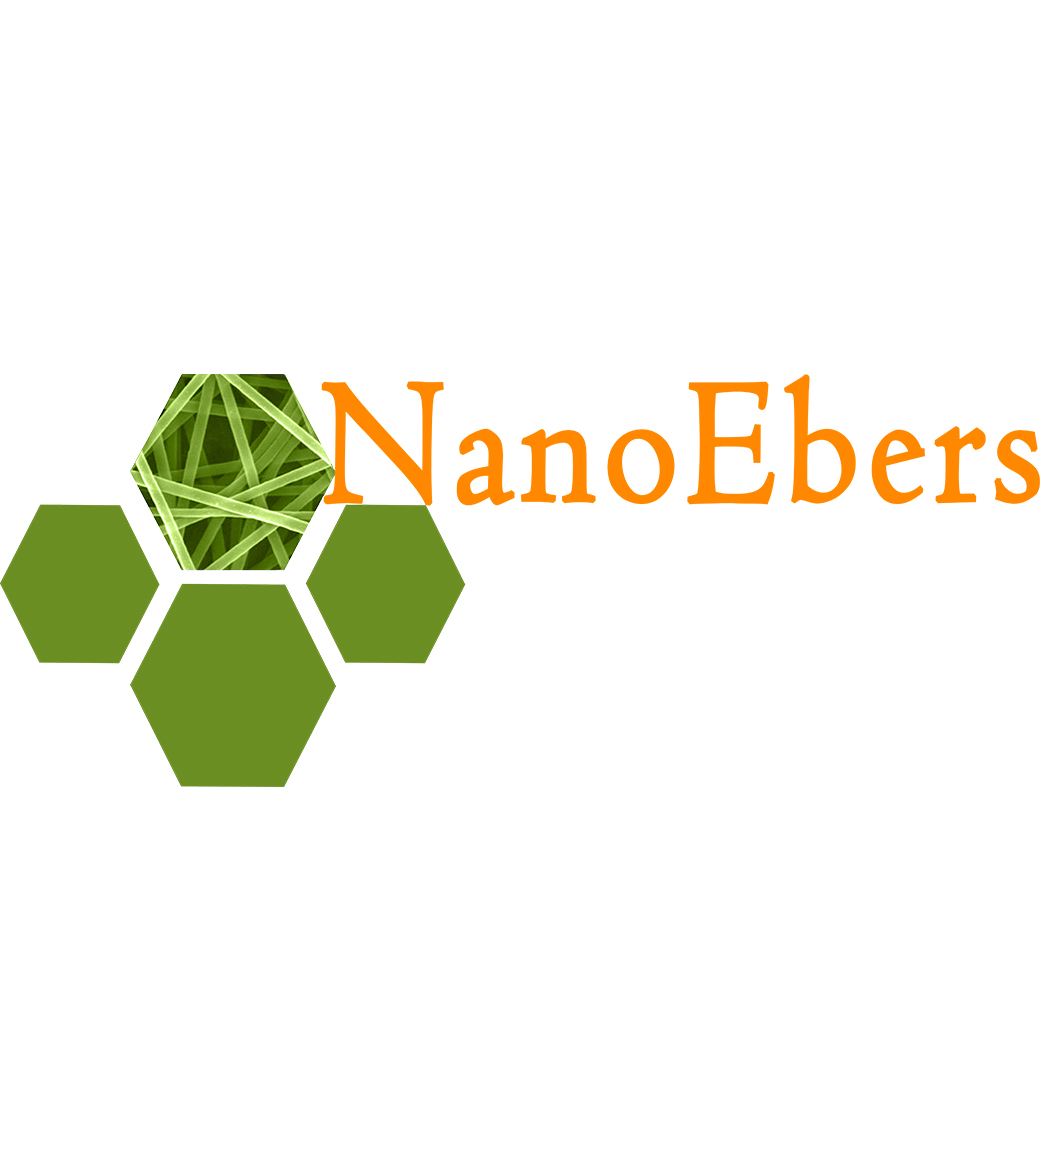 Nanoebers